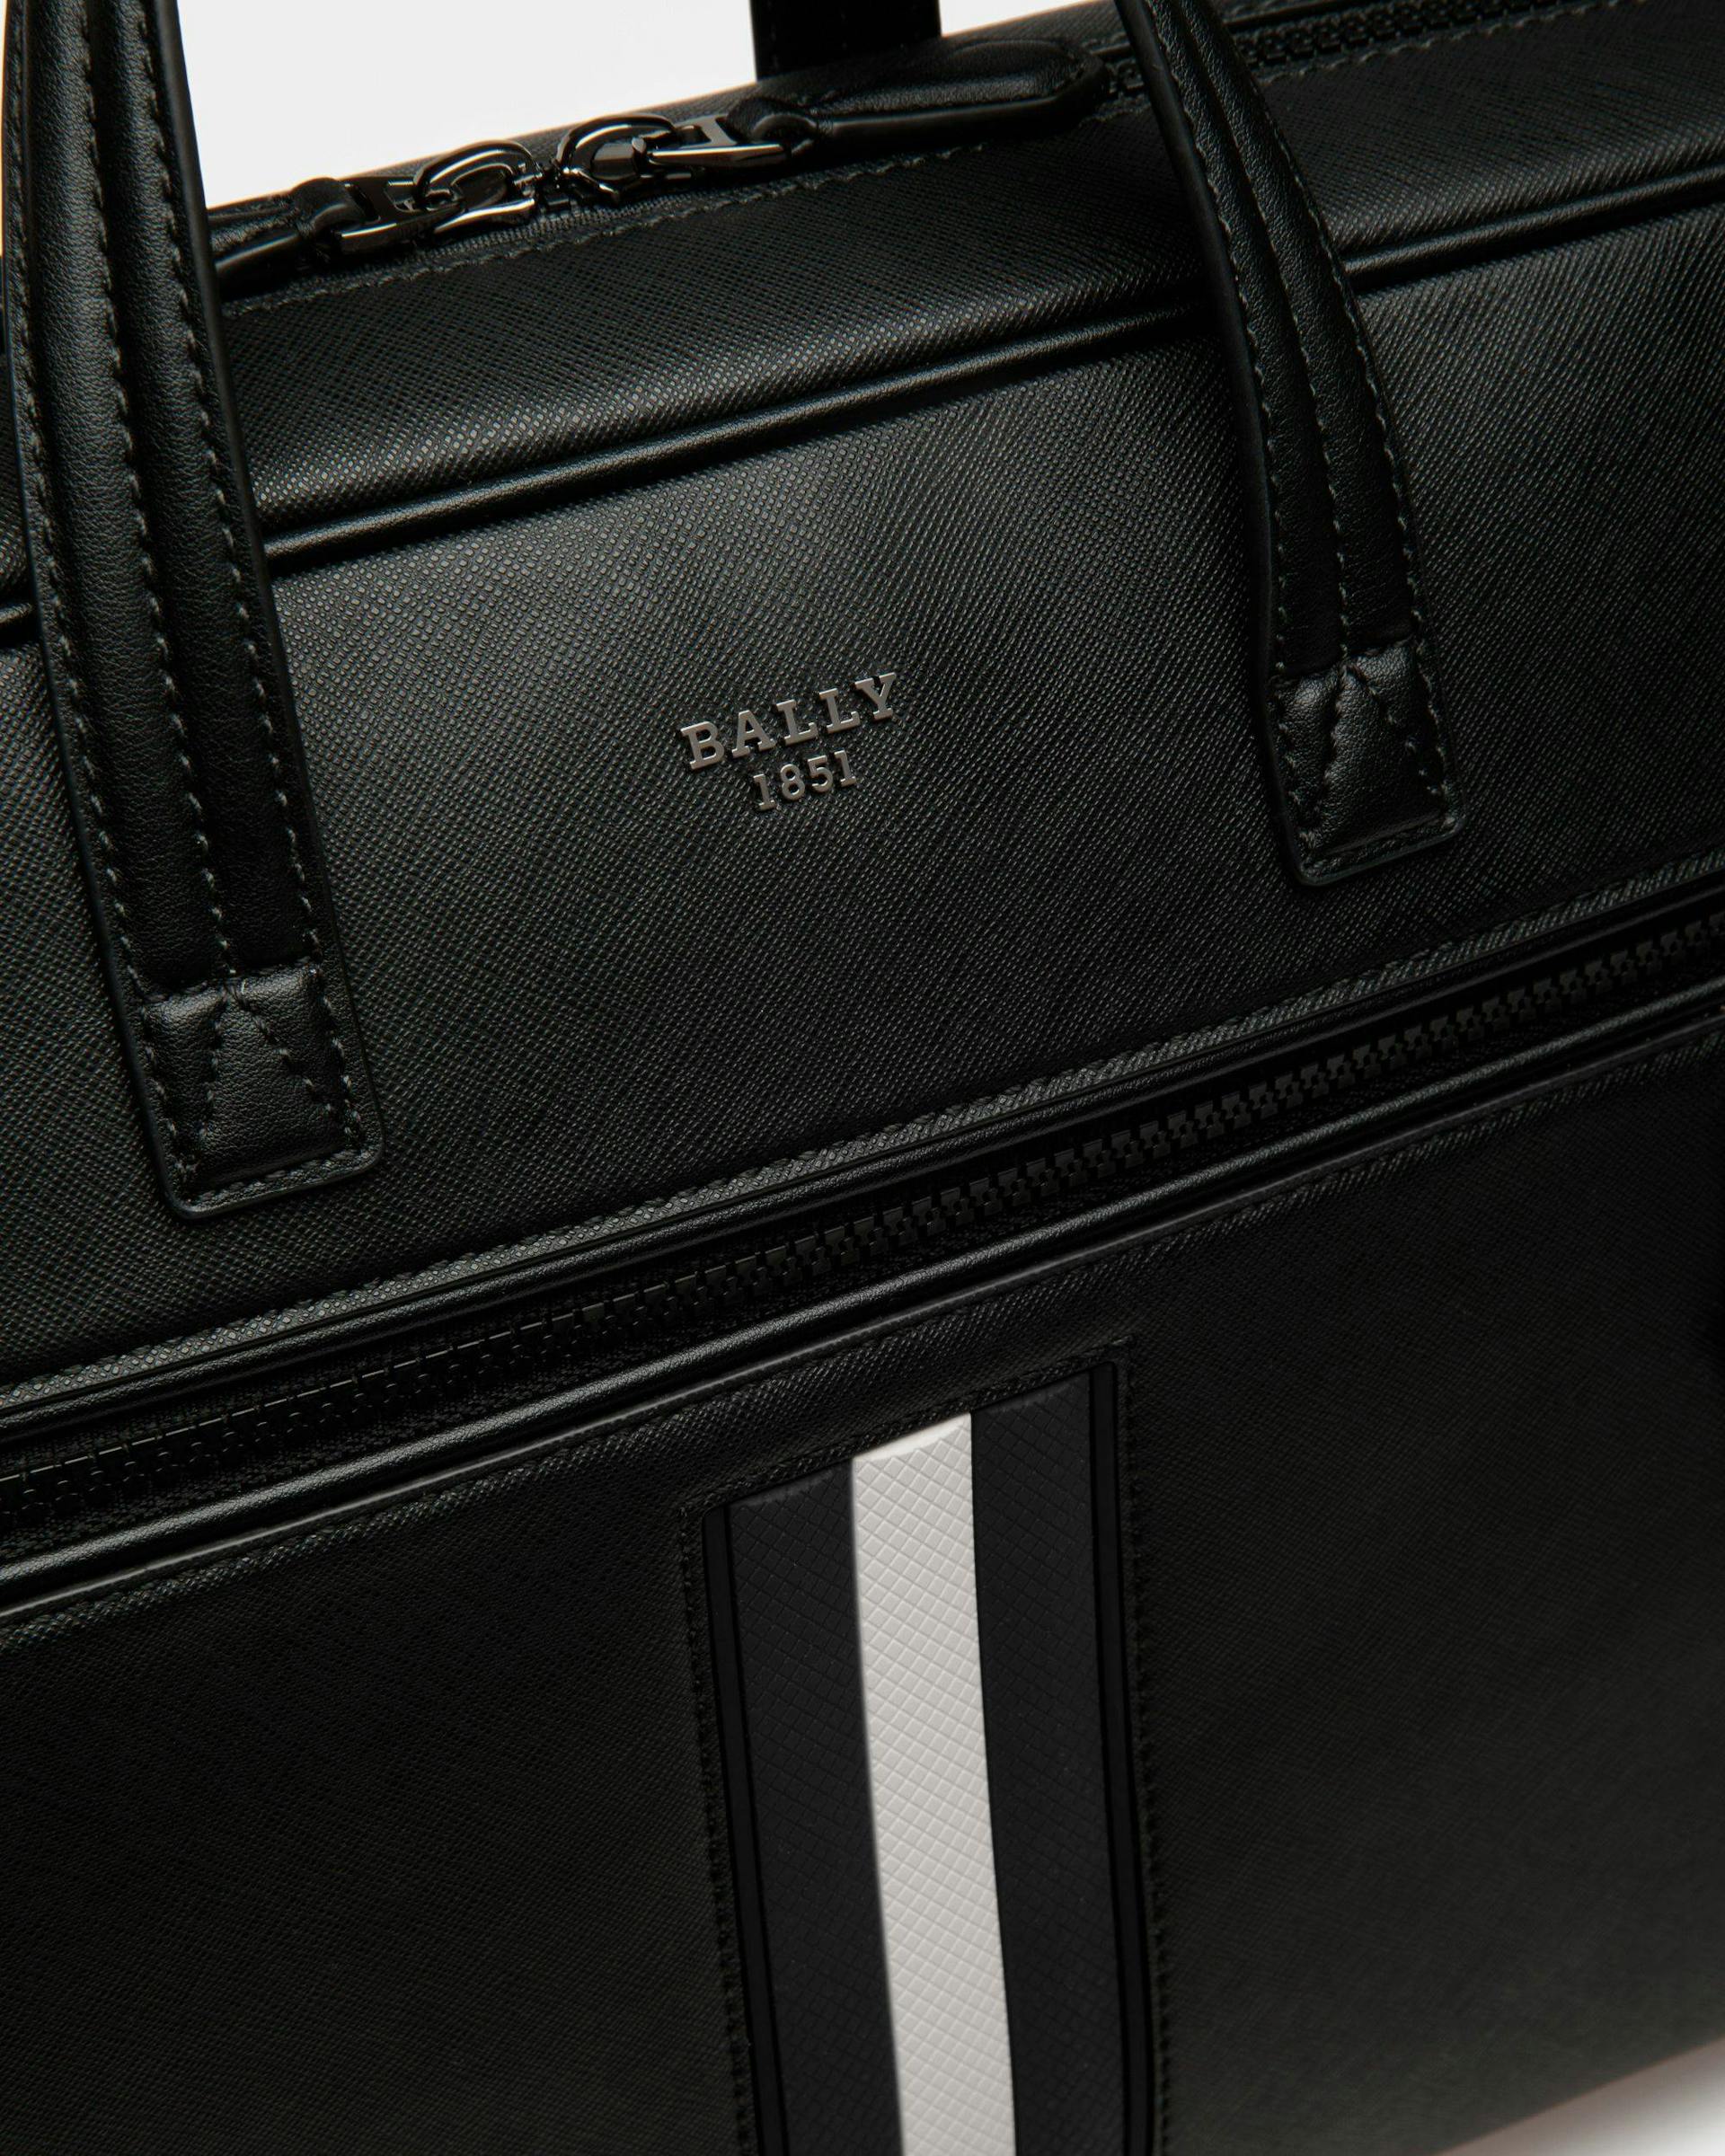 Men's Mythos Business Bag In Black Leather | Bally | Still Life Detail